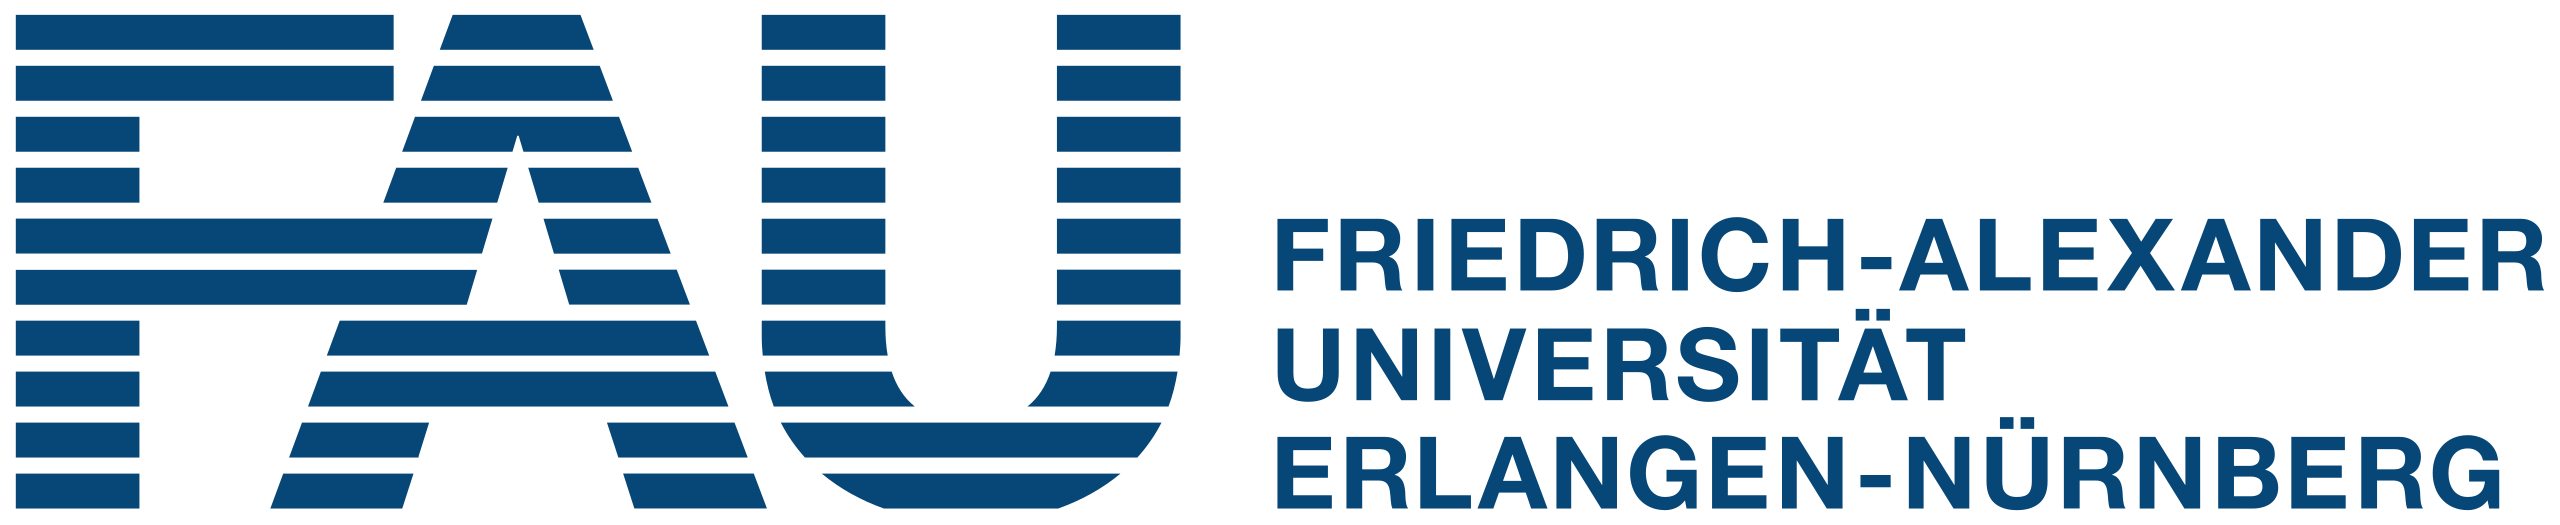 Friedrich-Alexander-Universität_Erlangen-Nürnberg_logo.svg